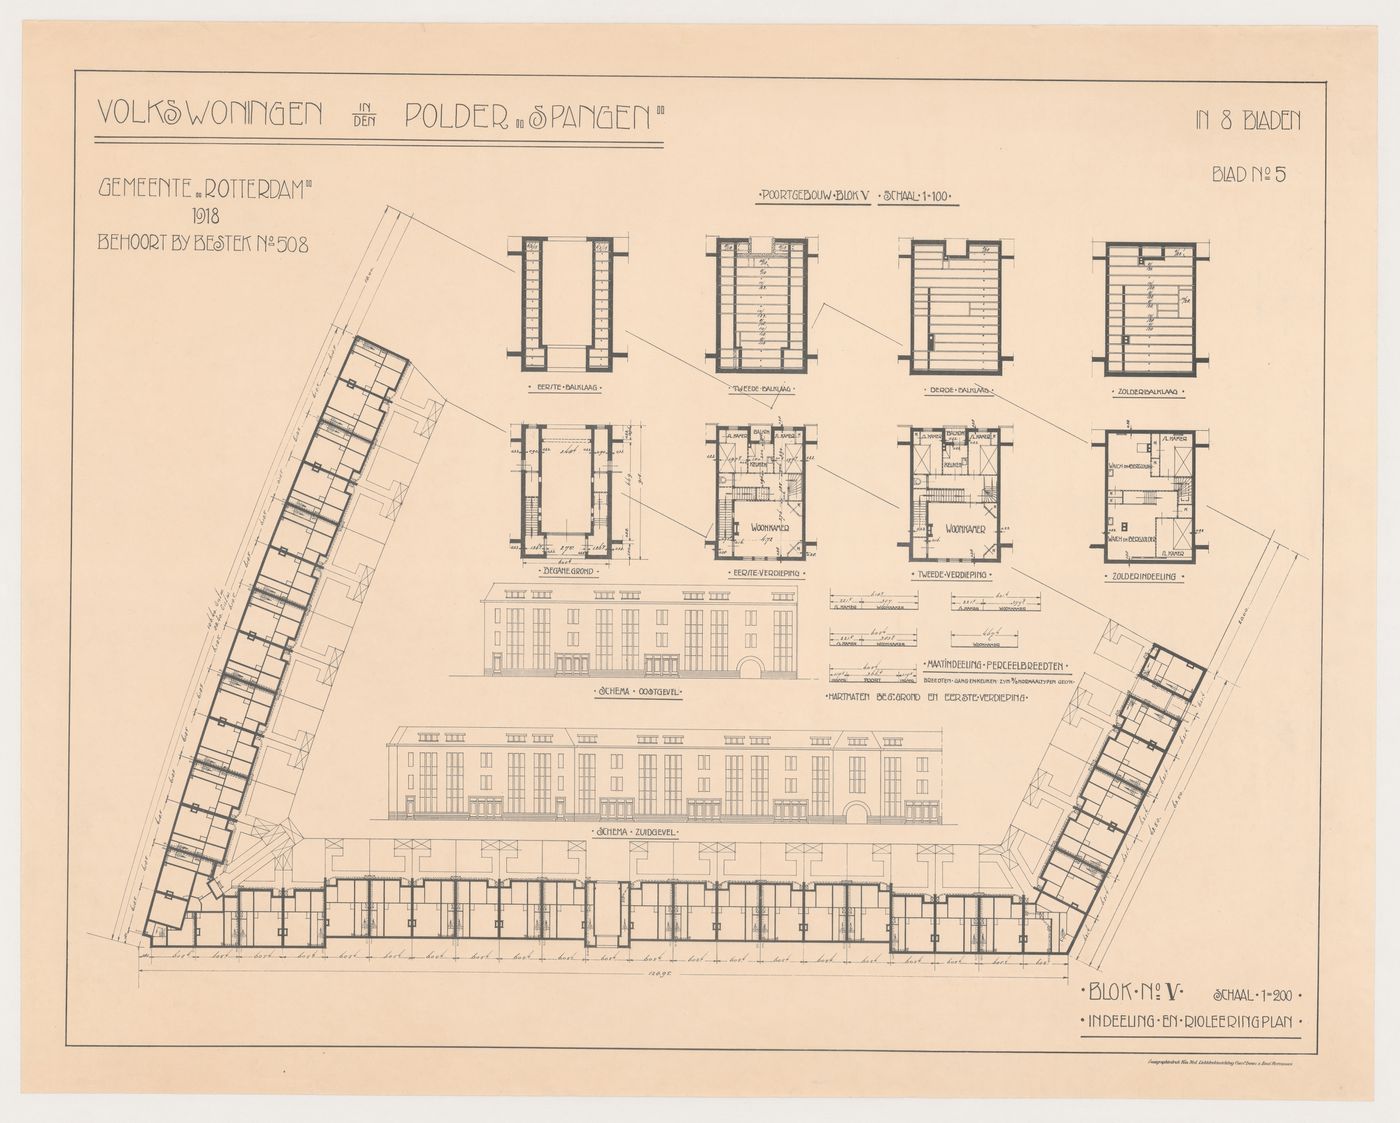 Plans, framing plans, and partial elevations for Block 5, Spangen Housing Estate, Rotterdam, Netherlands